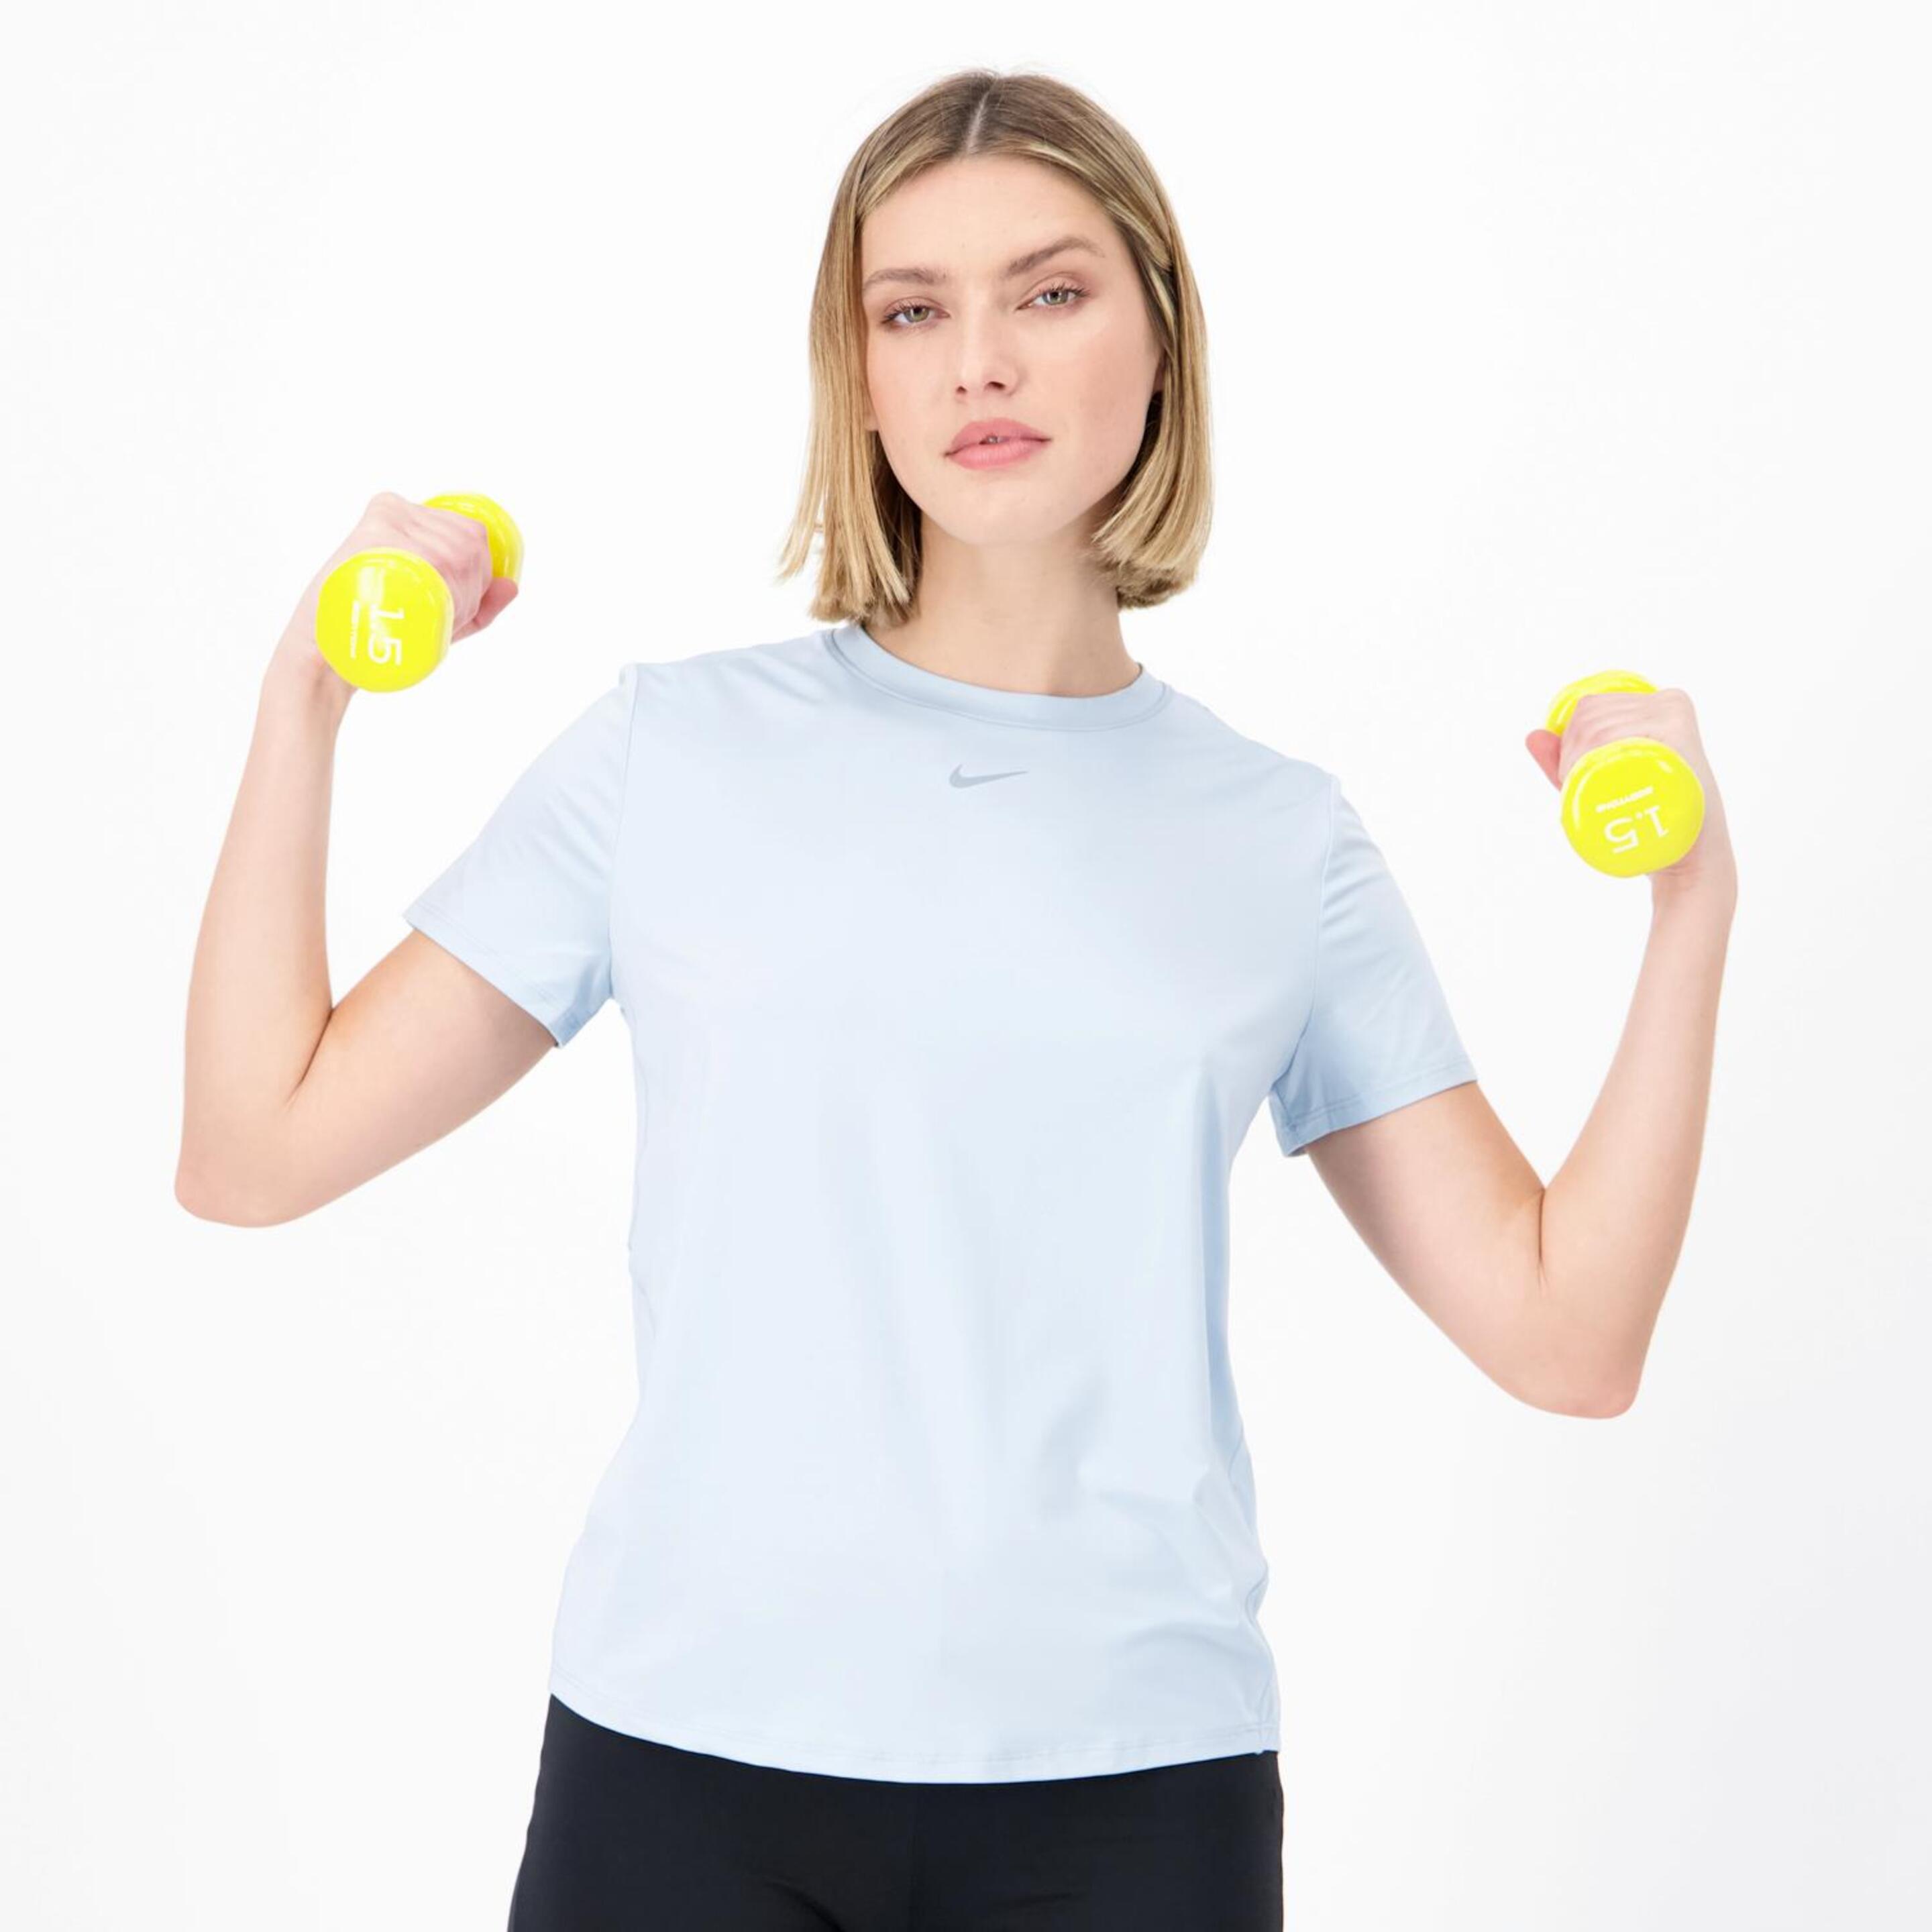 Nike One - azul - T-shirt Ginásio Mulher